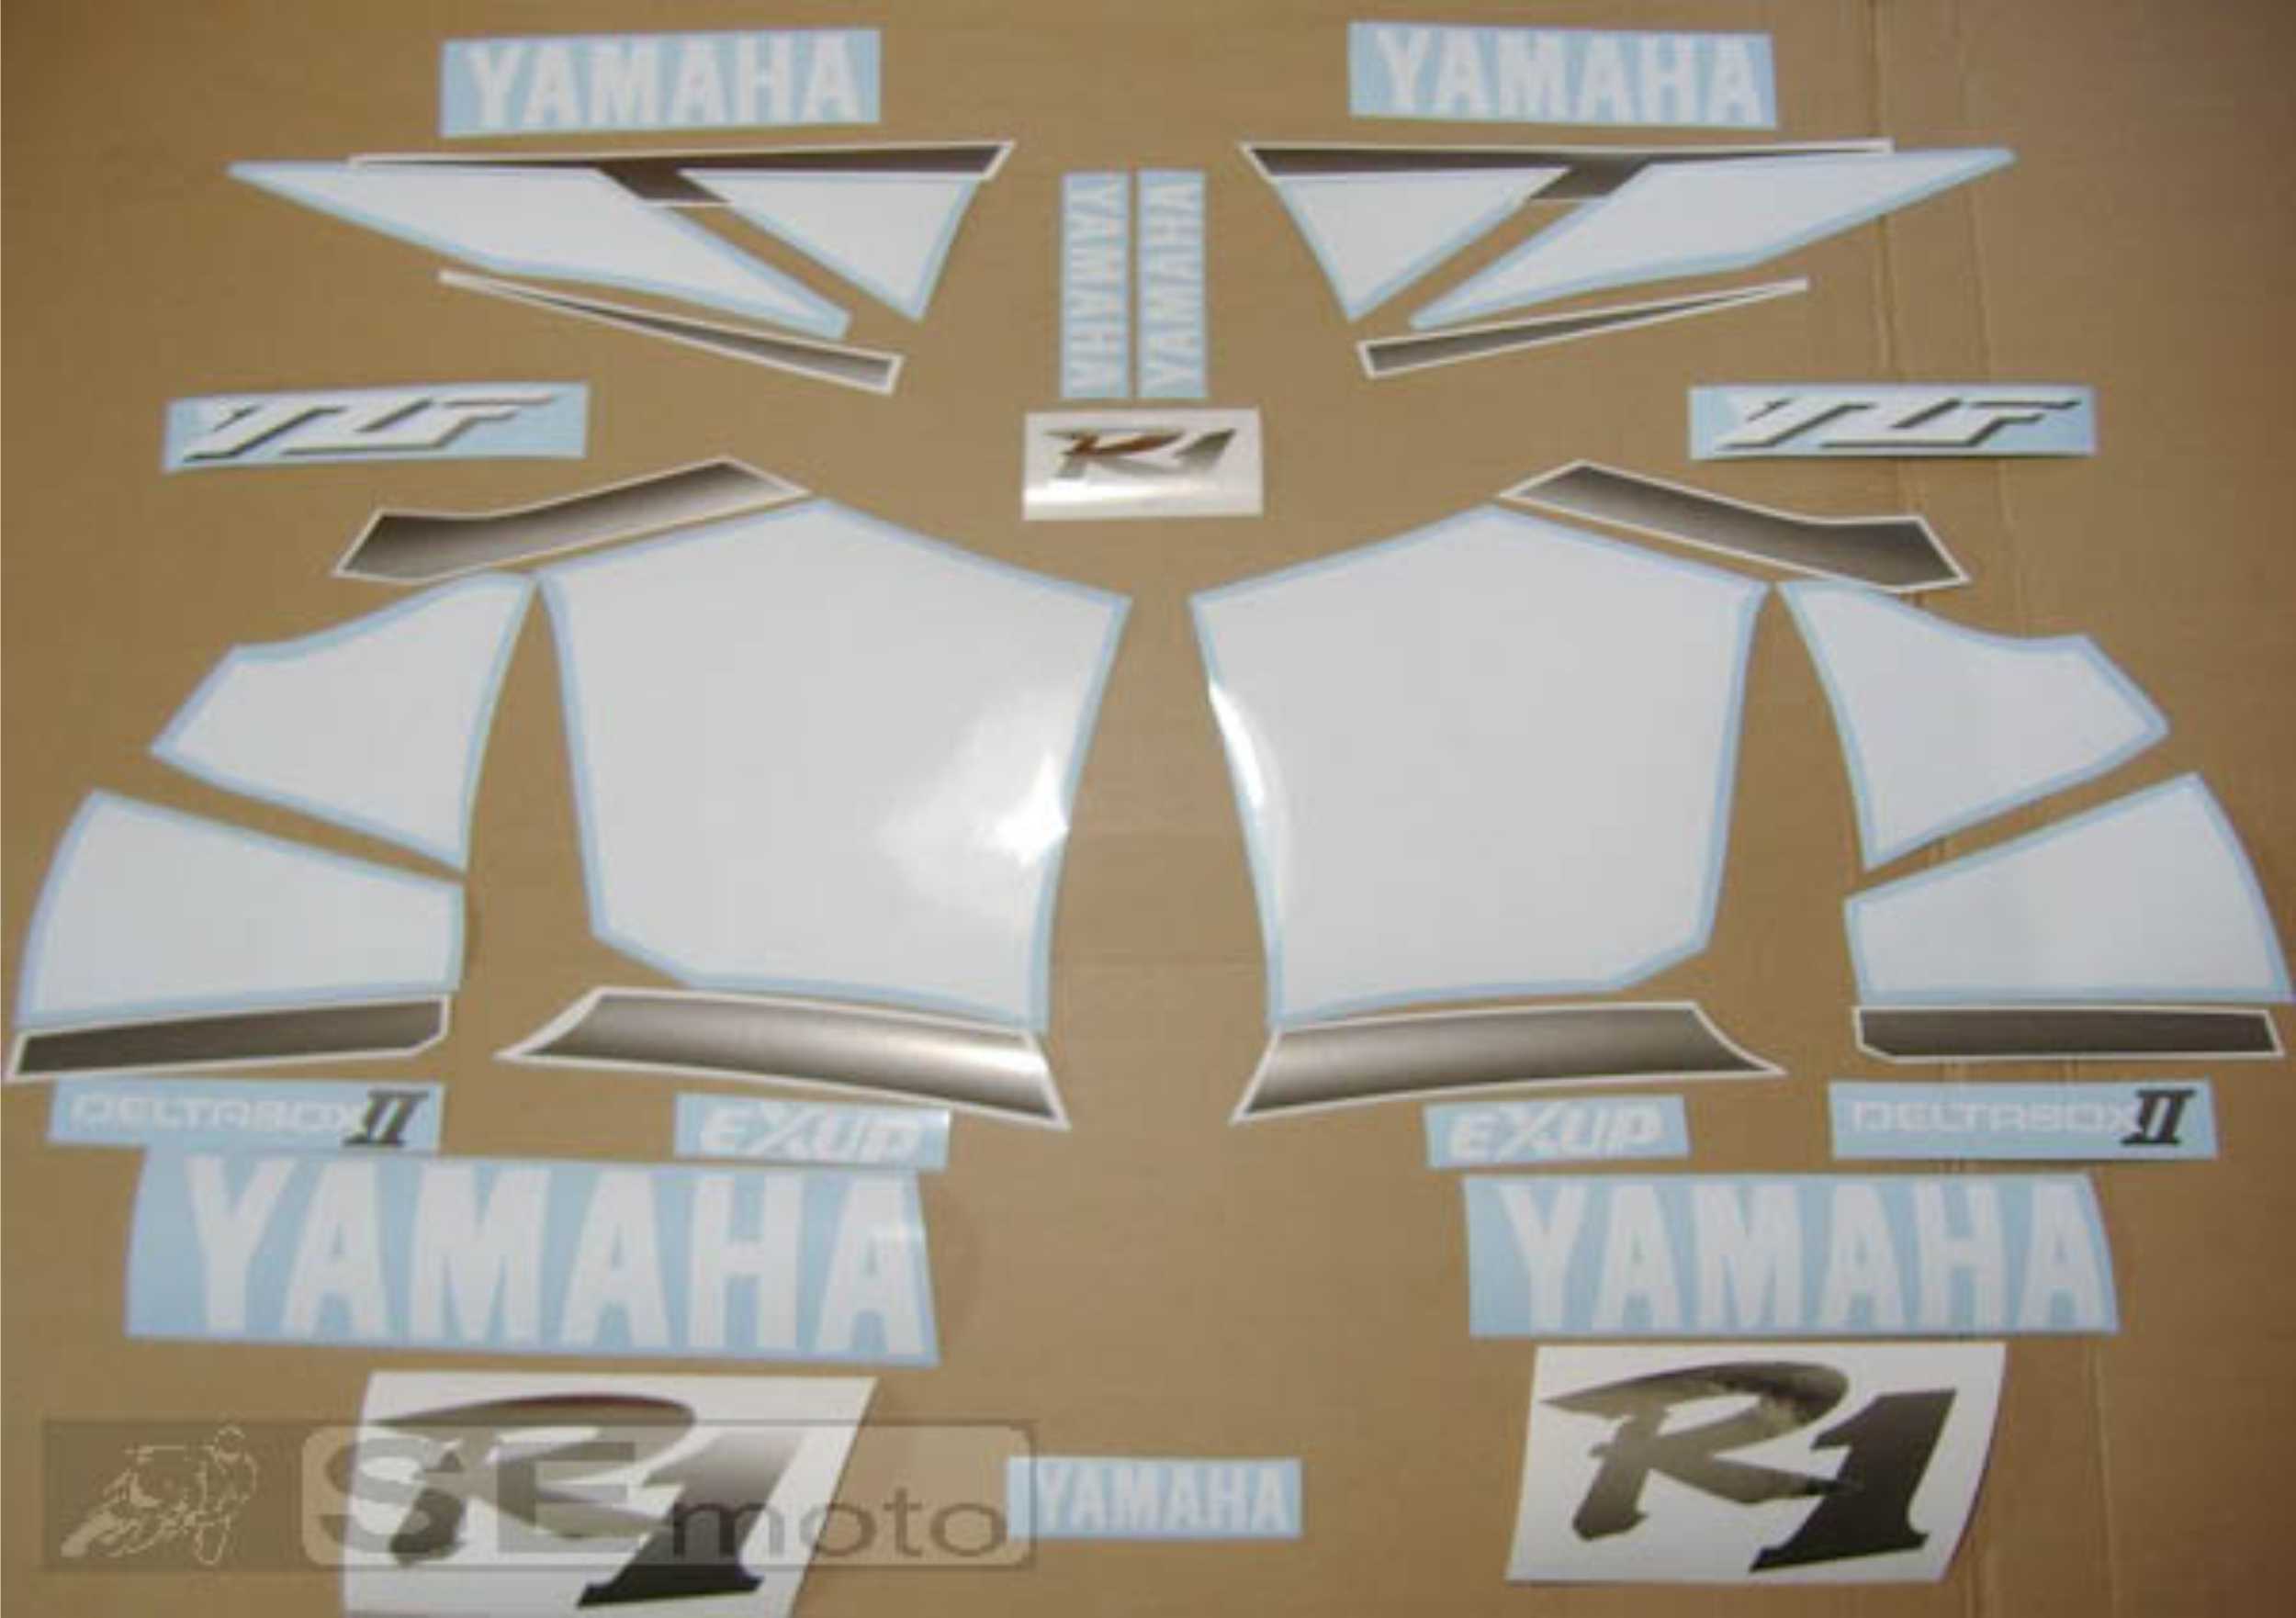 Yamaha YZF-R1 2001 синий- фото2